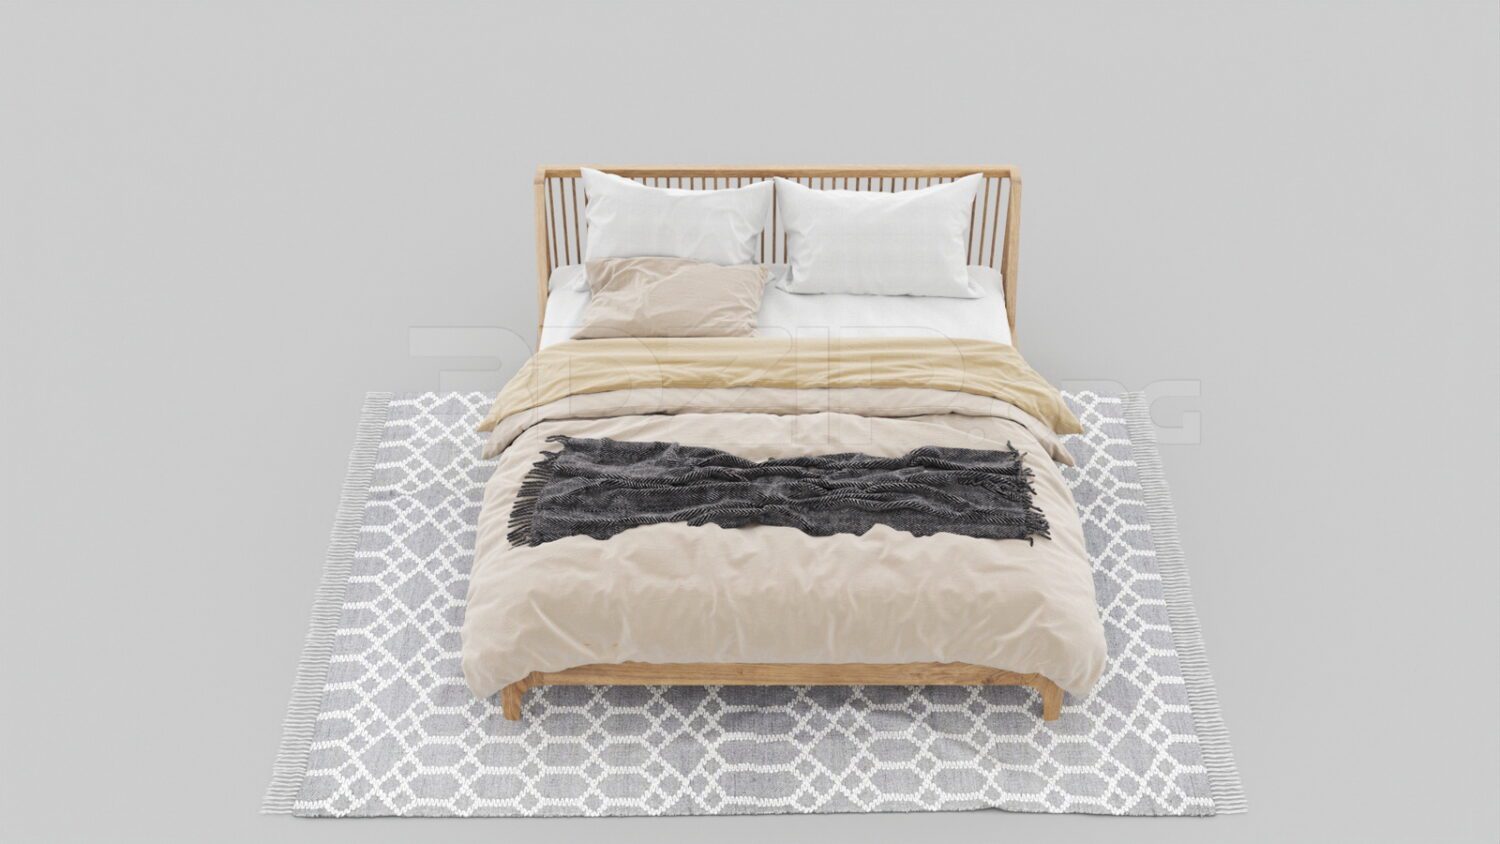 3878. Free 3D Bed Model Download